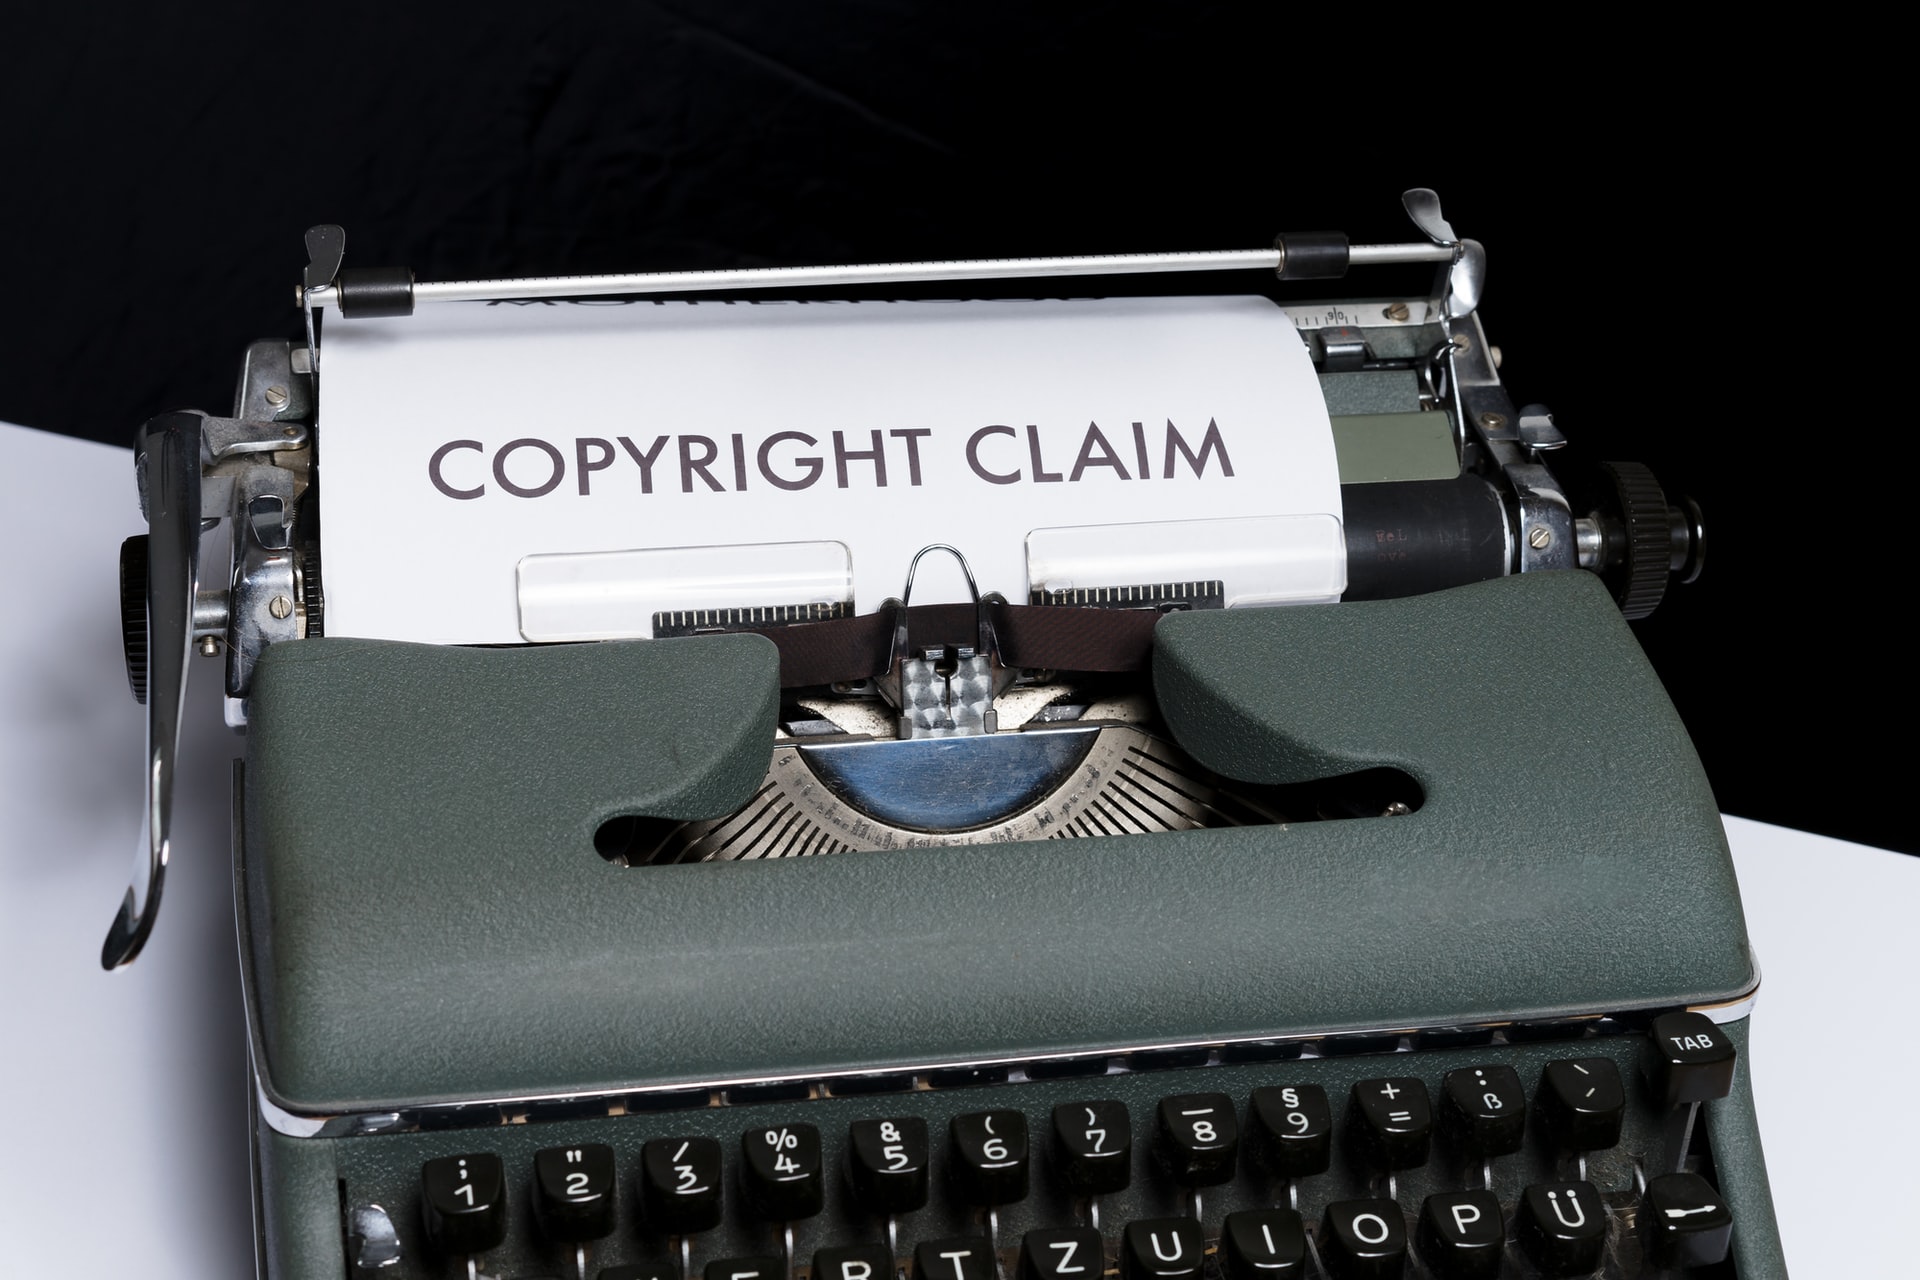 "Copyright claim"